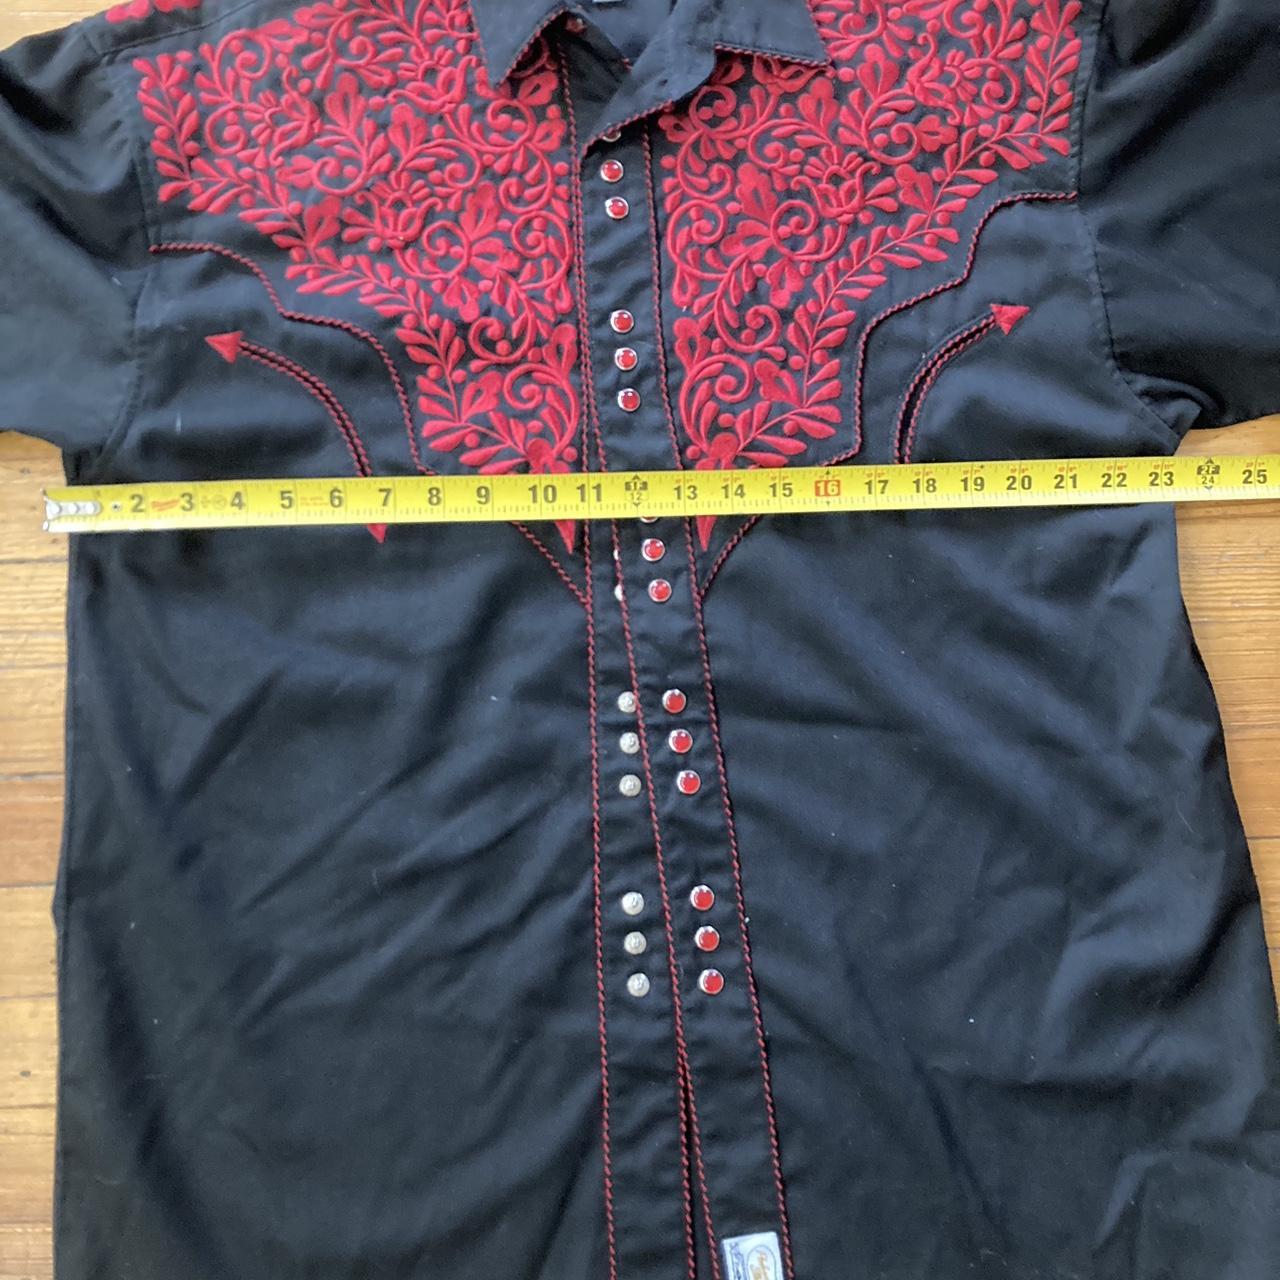 Panhandle Men's Black and Red Shirt | Depop